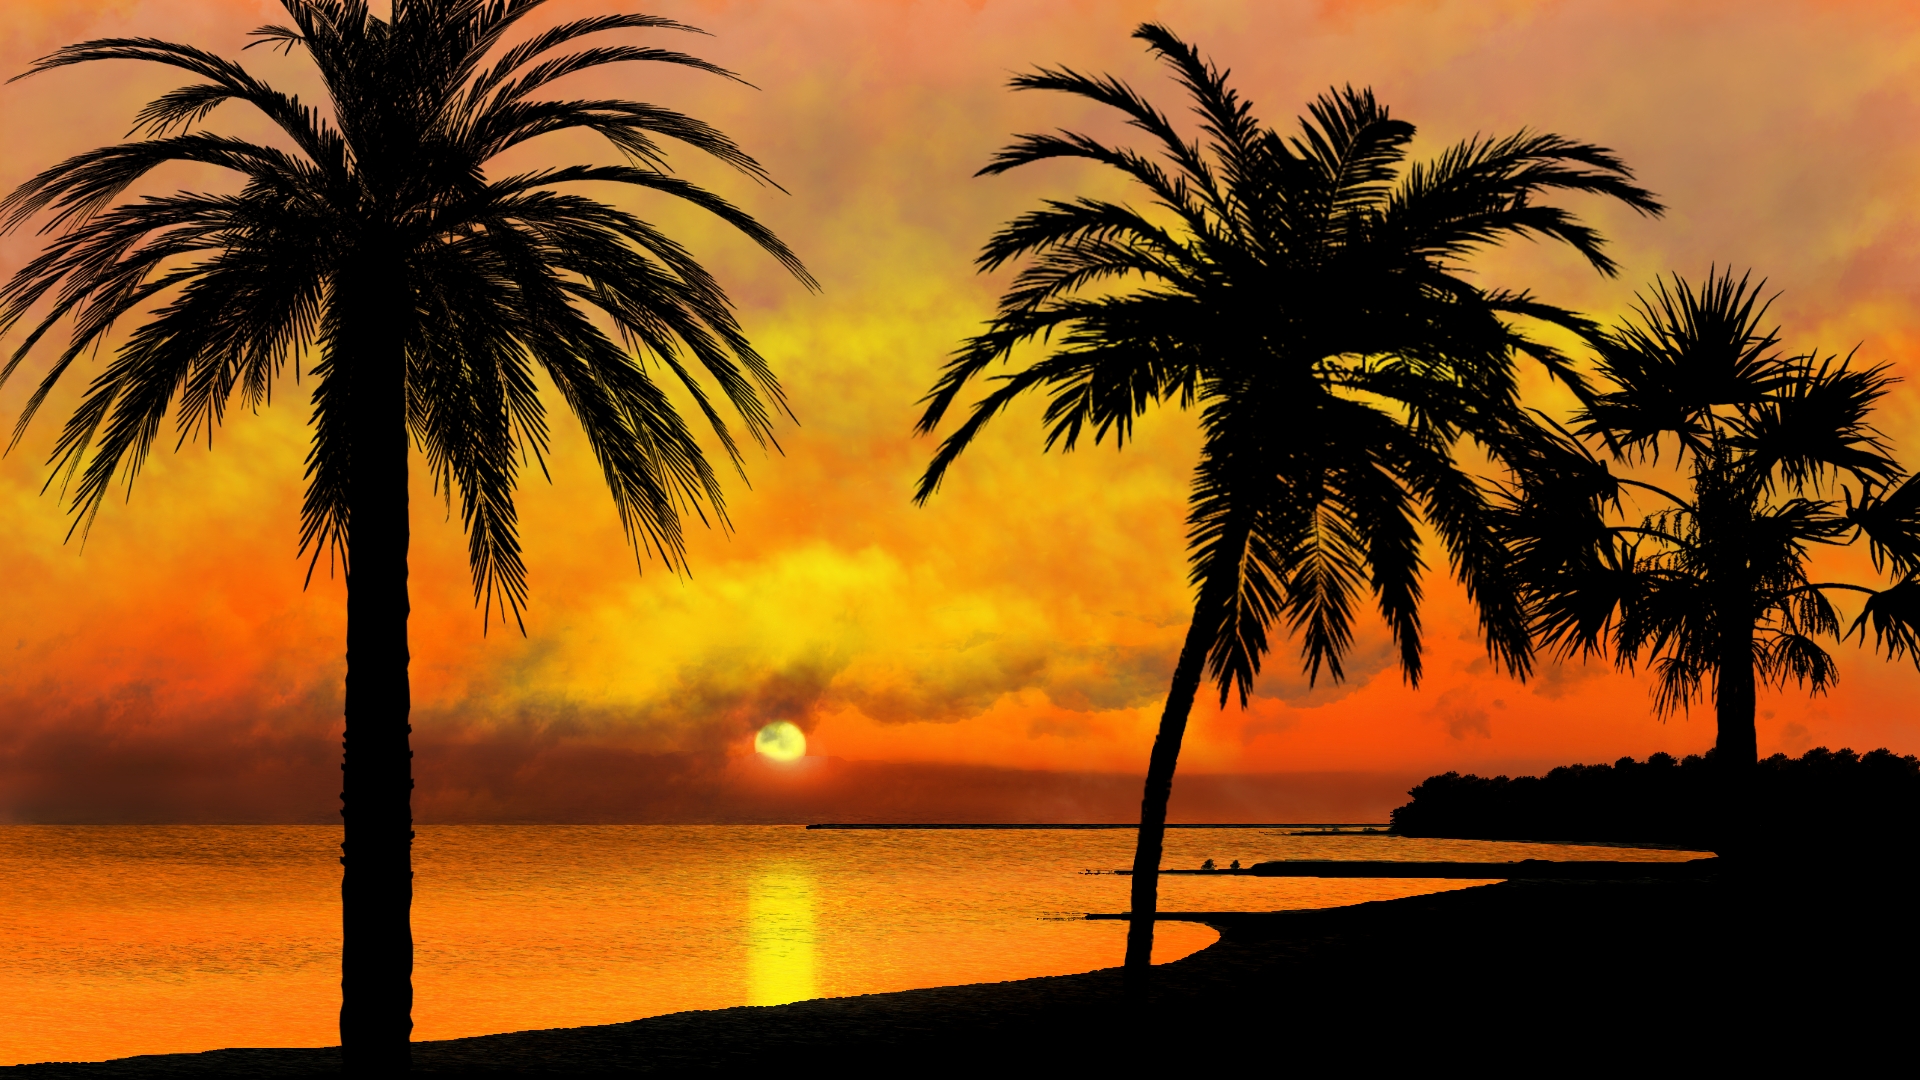 Digital Art Nature Landscape Beach Tropical Sunset Sunset Glow Palm Trees Sky Clouds Sun Water Silho 1920x1080